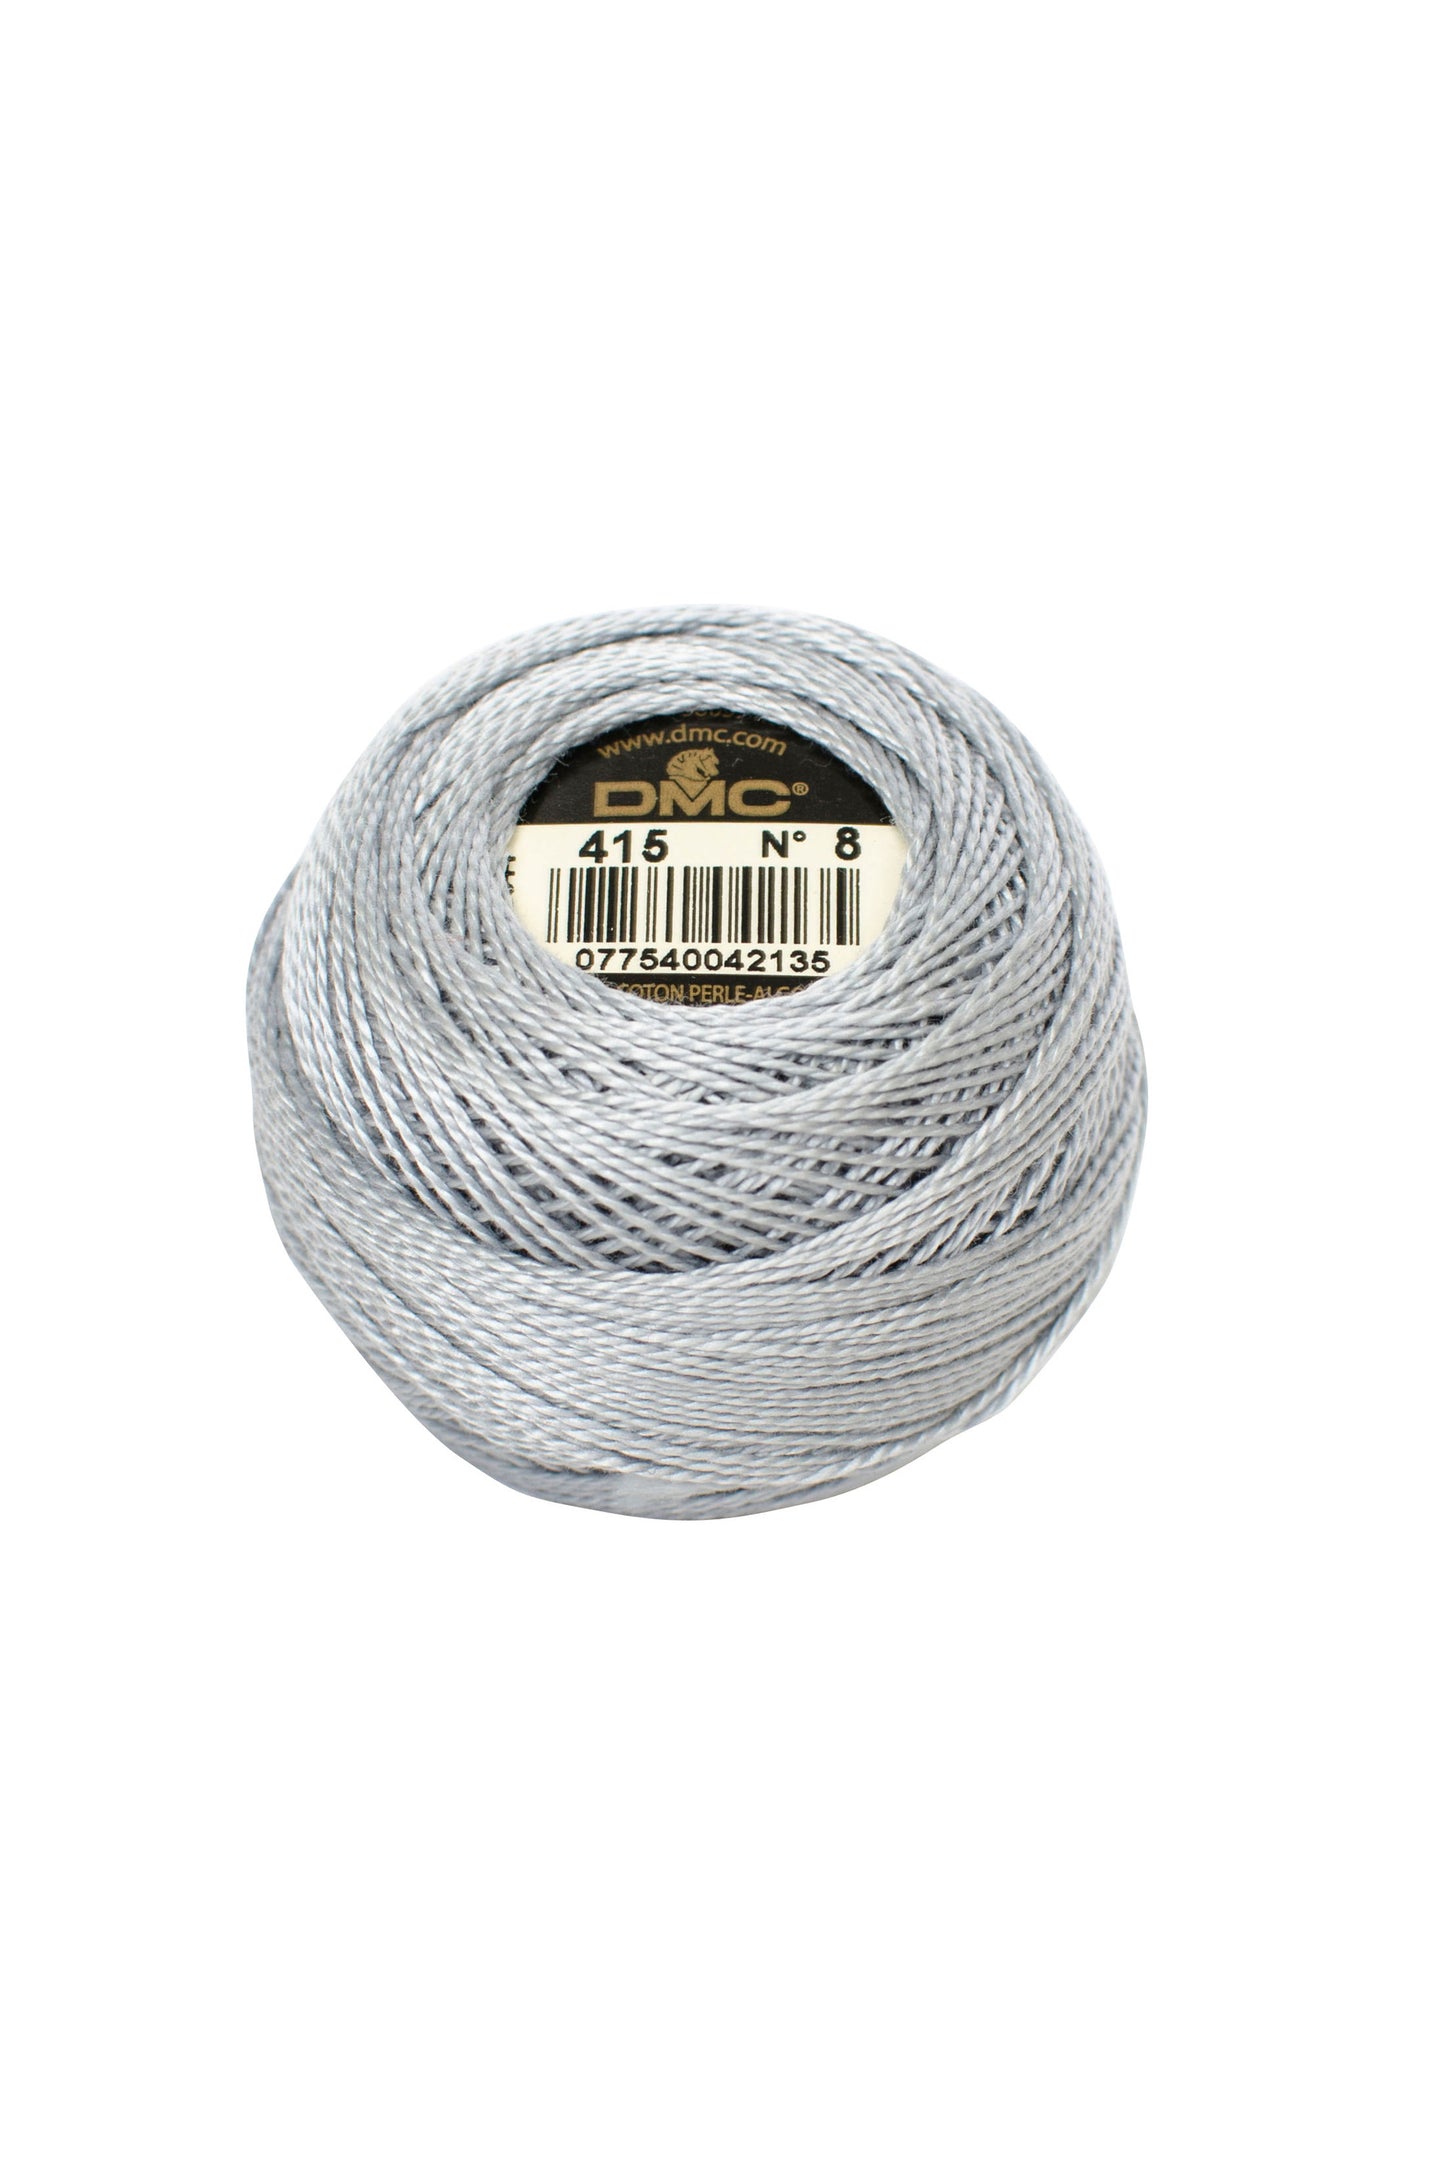 415 Pearl Grey – DMC #12 Perle Cotton